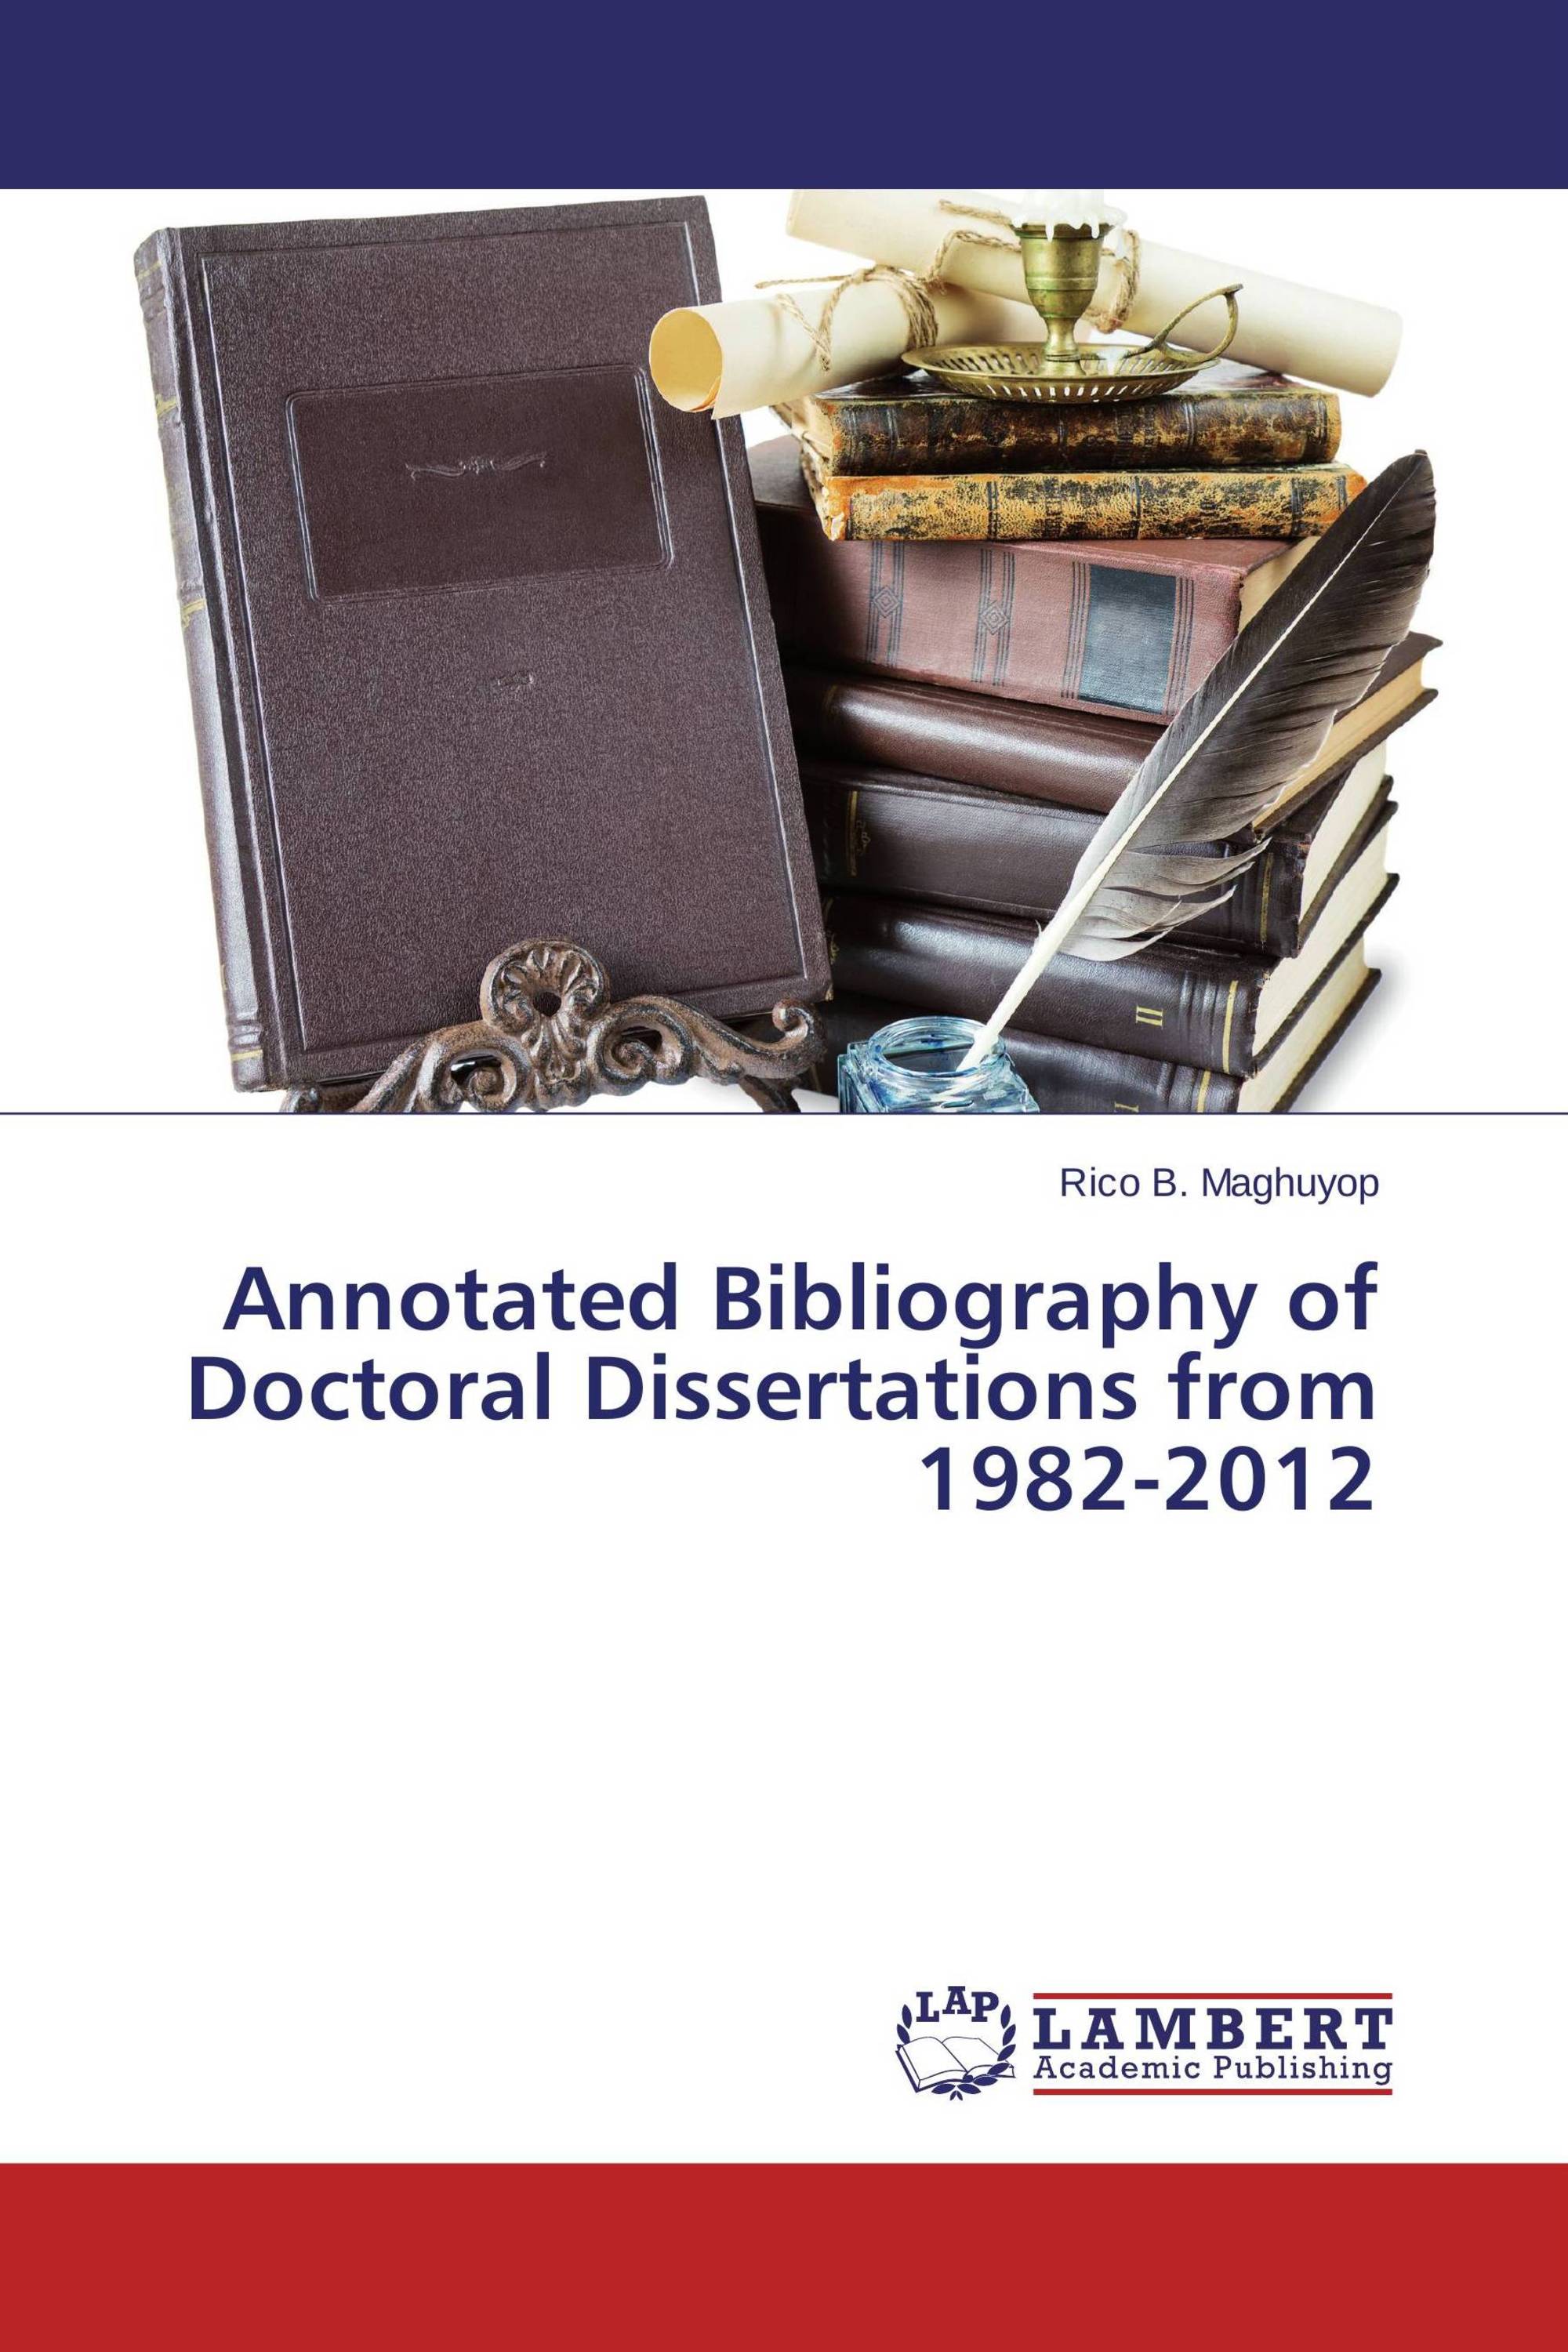 ucla doctoral dissertations